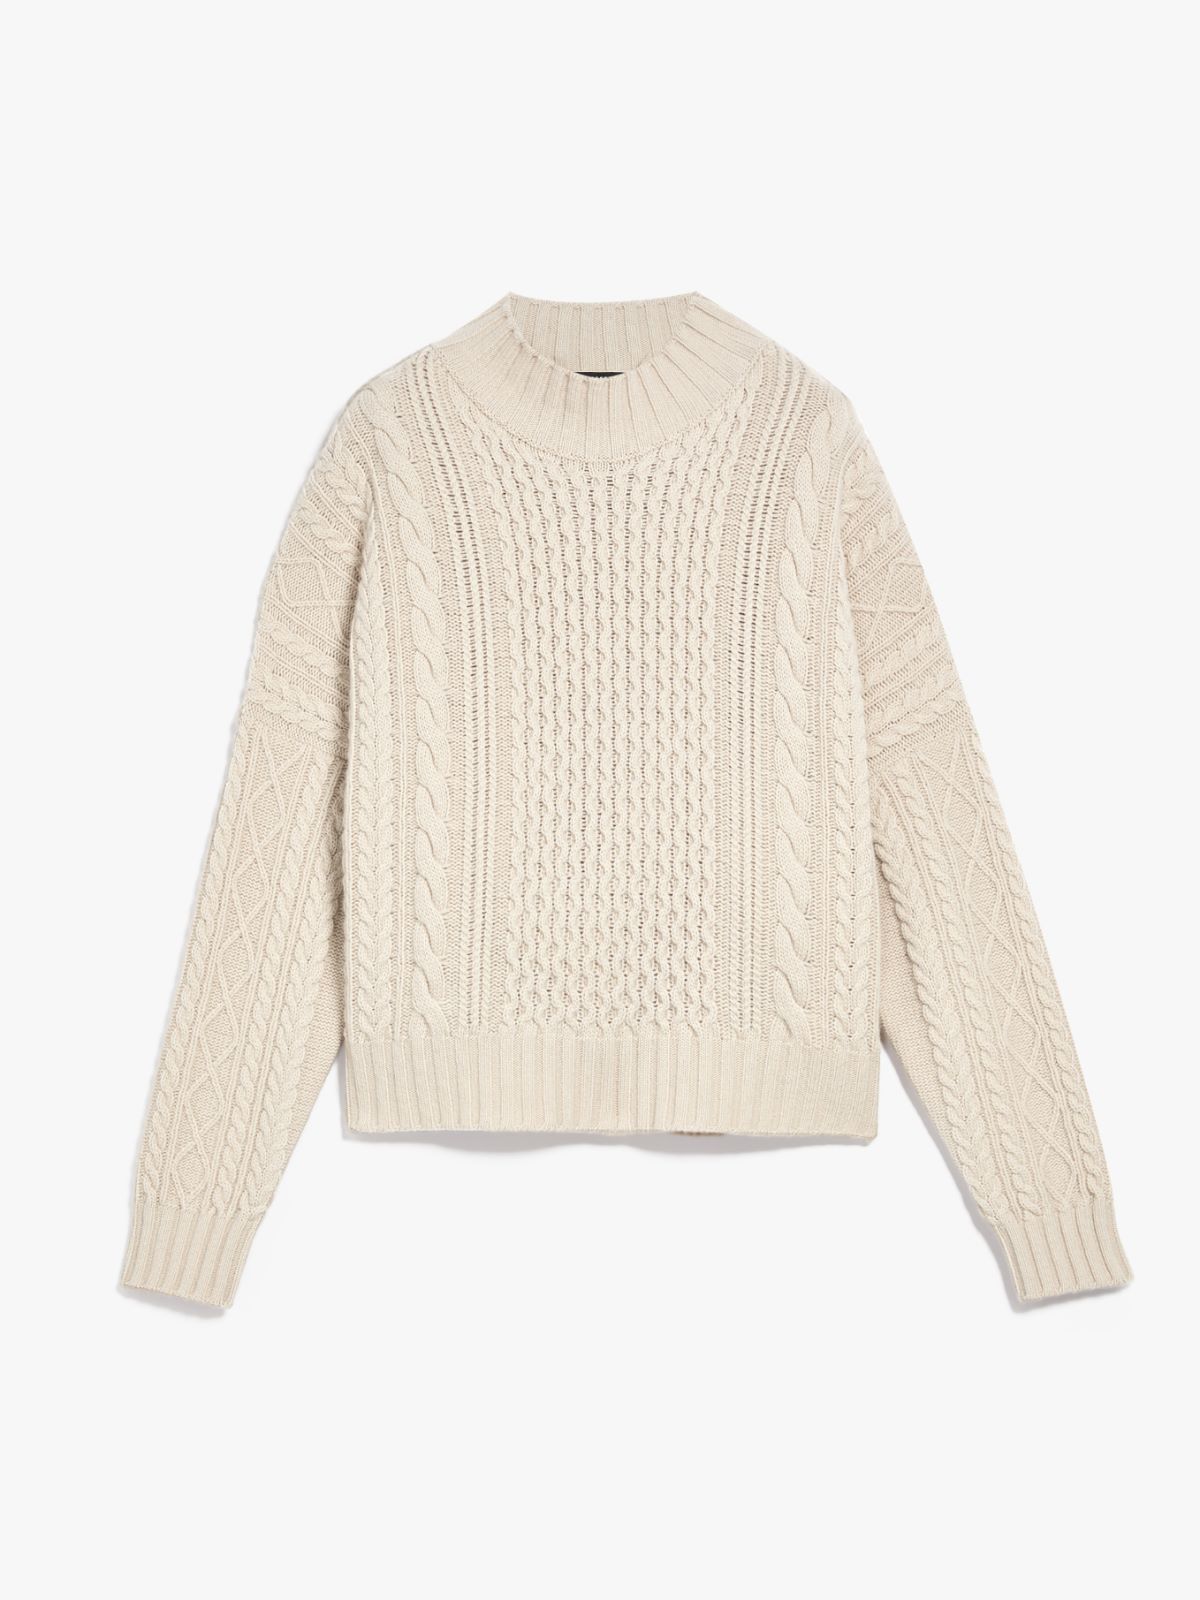 Carded wool yarn sweater - BEIGE - Weekend Max Mara - 6